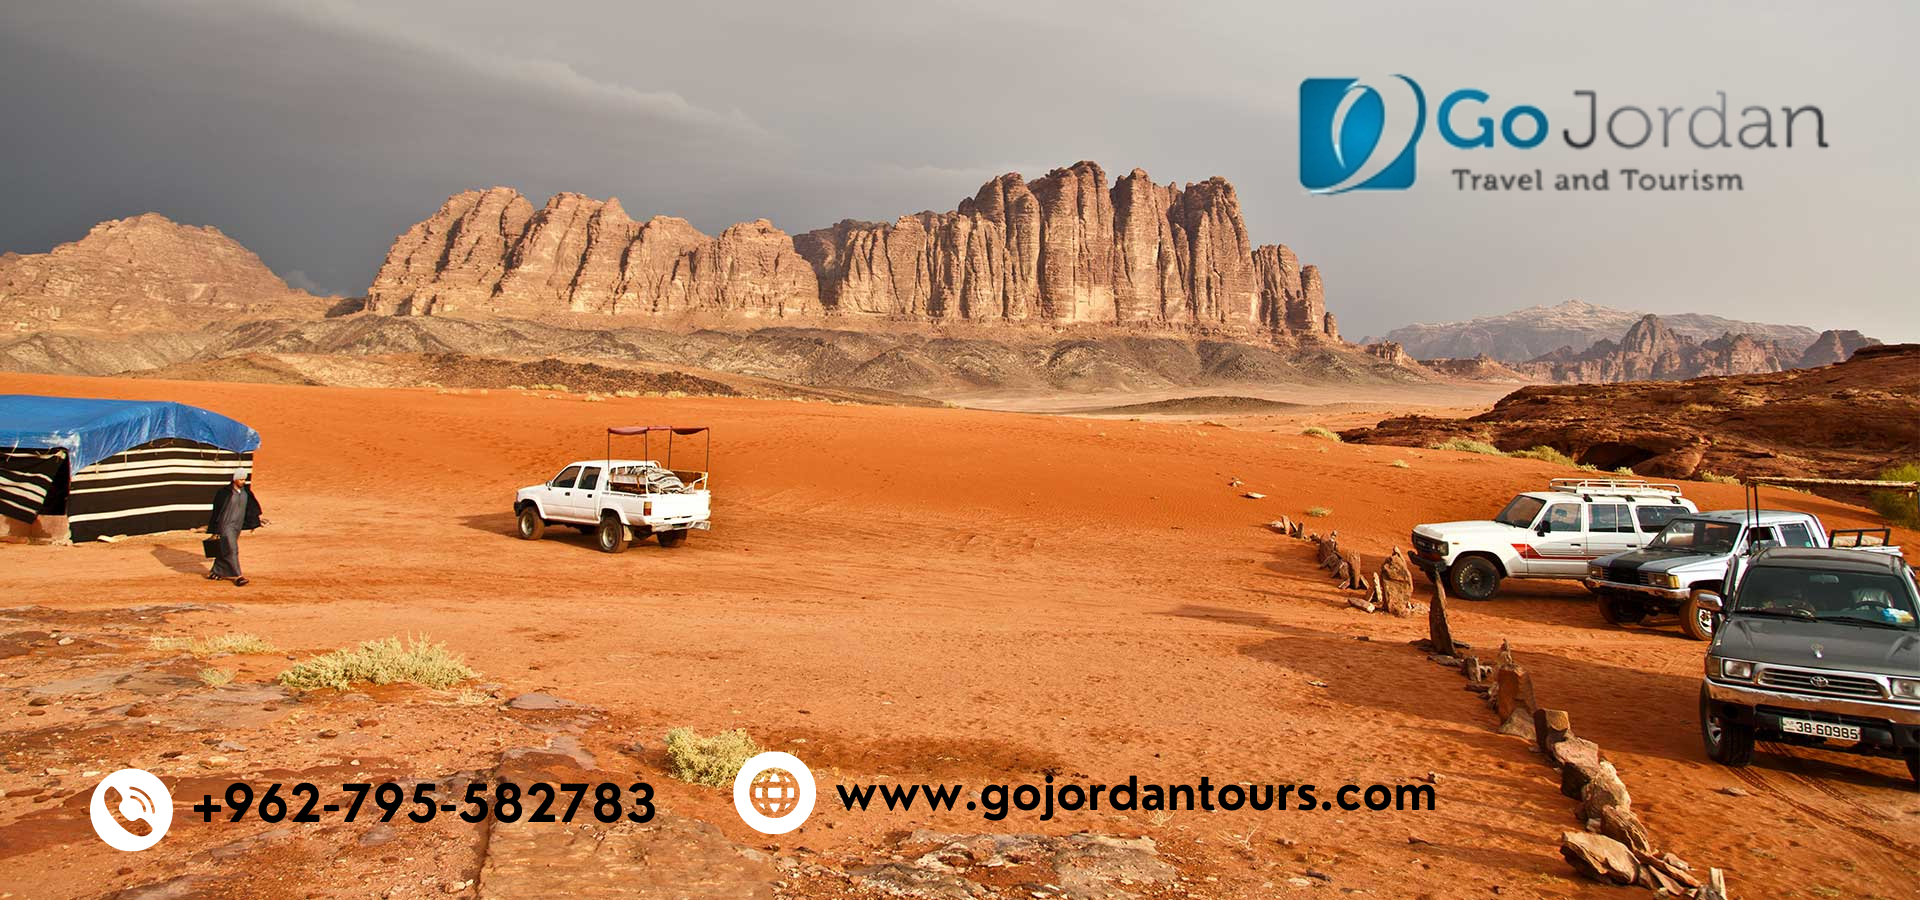 Unlock Your Adventure: Discover Jordan Tours with Go Jordan Travel and Tourism